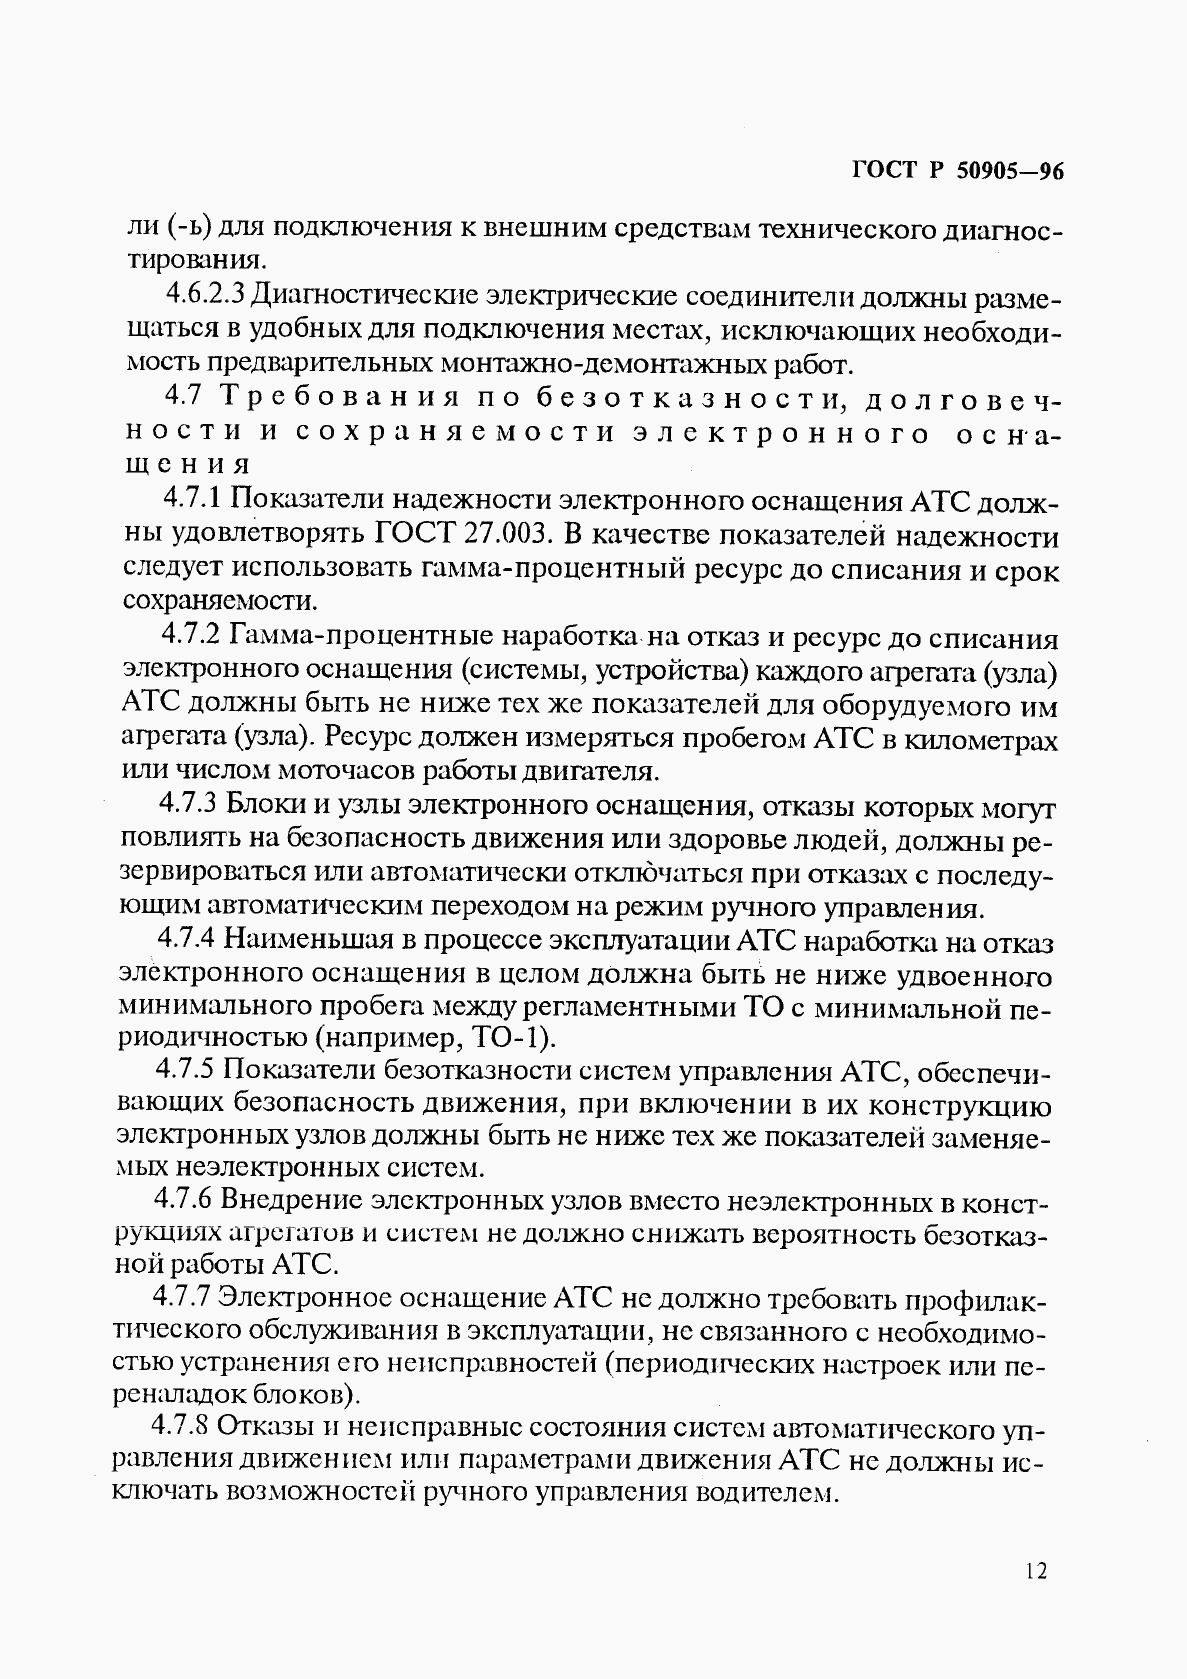 ГОСТ Р 50905-96, страница 15